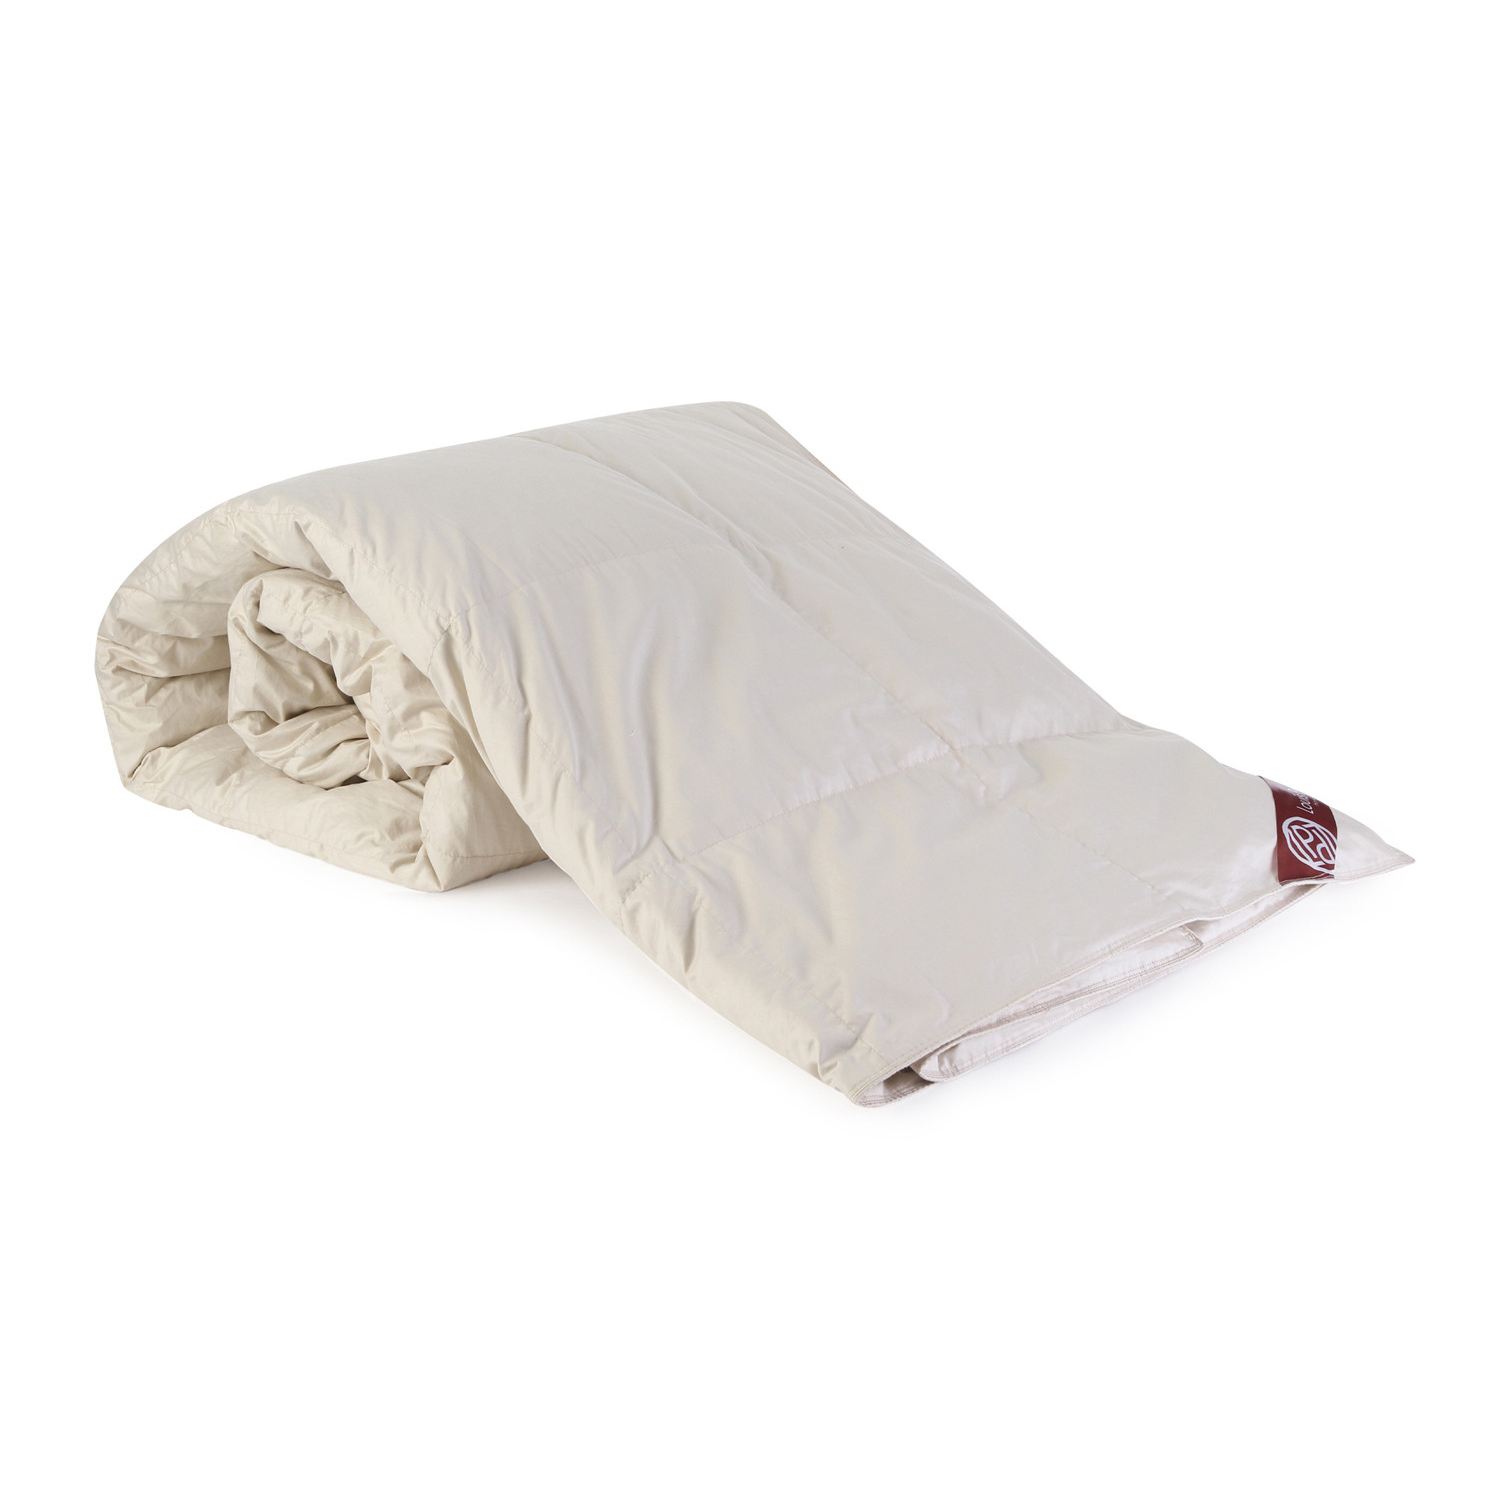 Пуховое одеяло Louis Pascal Николь бежевое 140х205 см (ЛП2022) одеяло louis pascal reina белое 140х200 см lp st